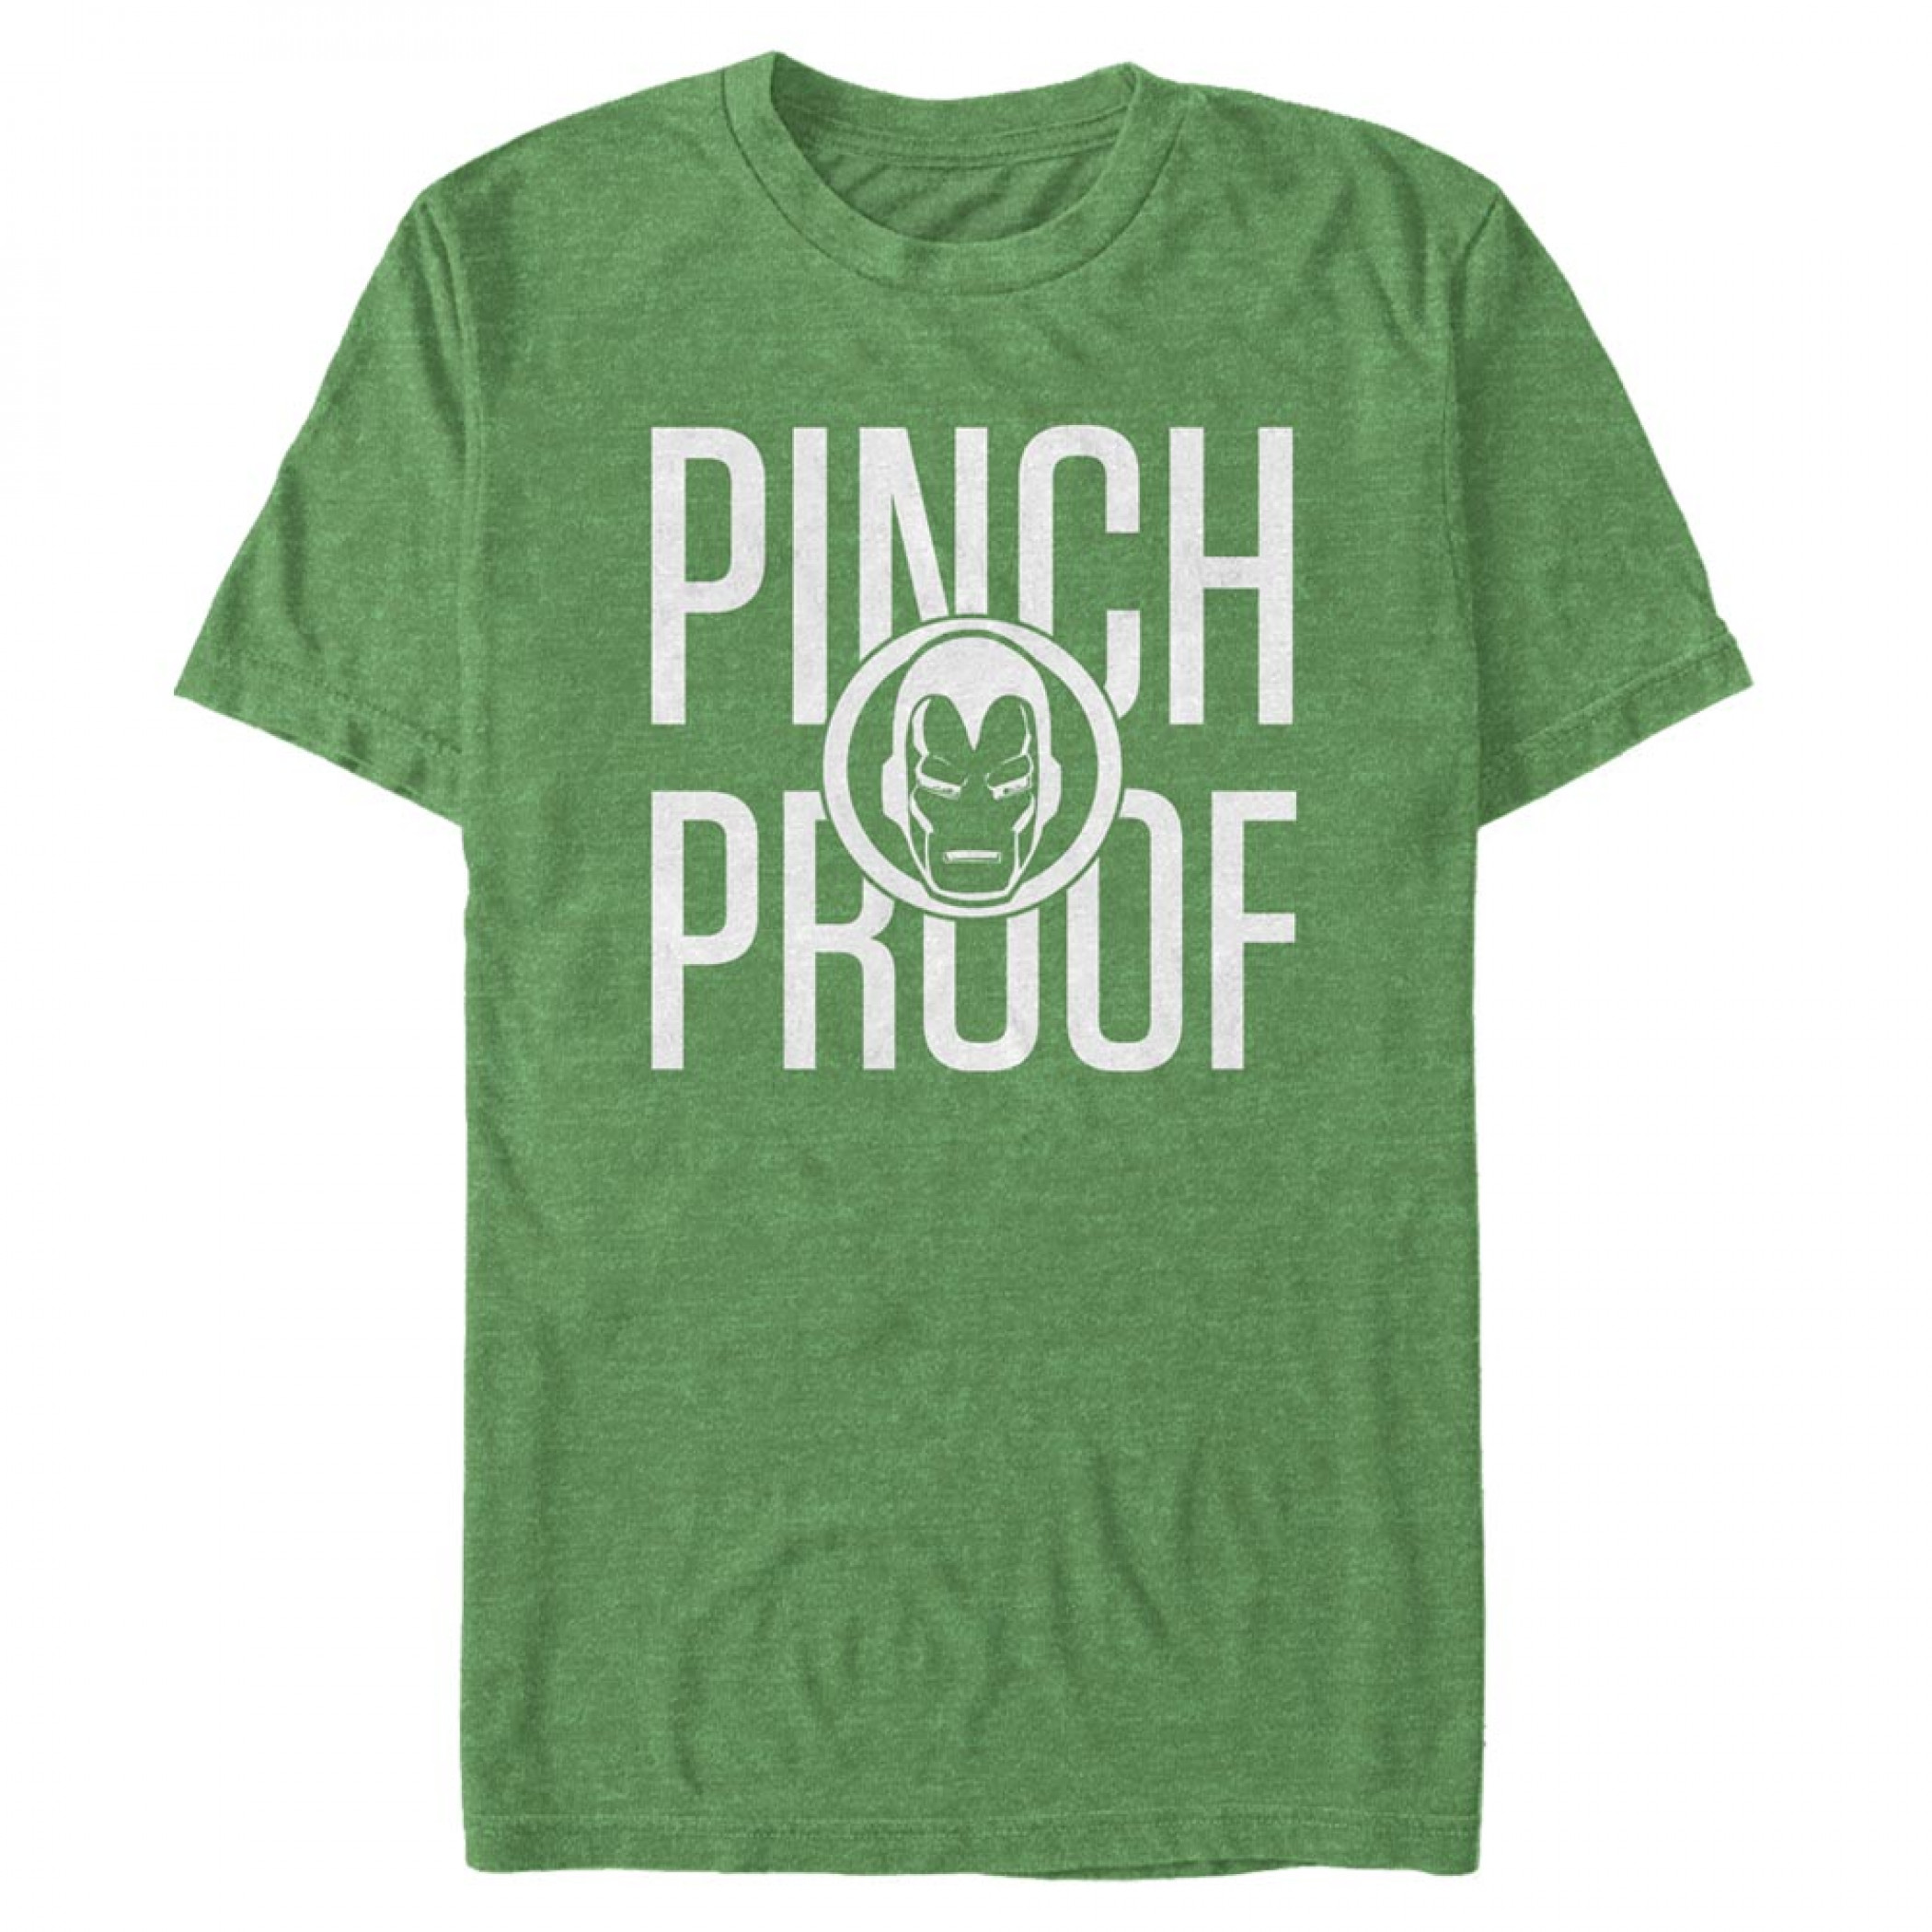 Iron Man Pinch Proof Green T-Shirt